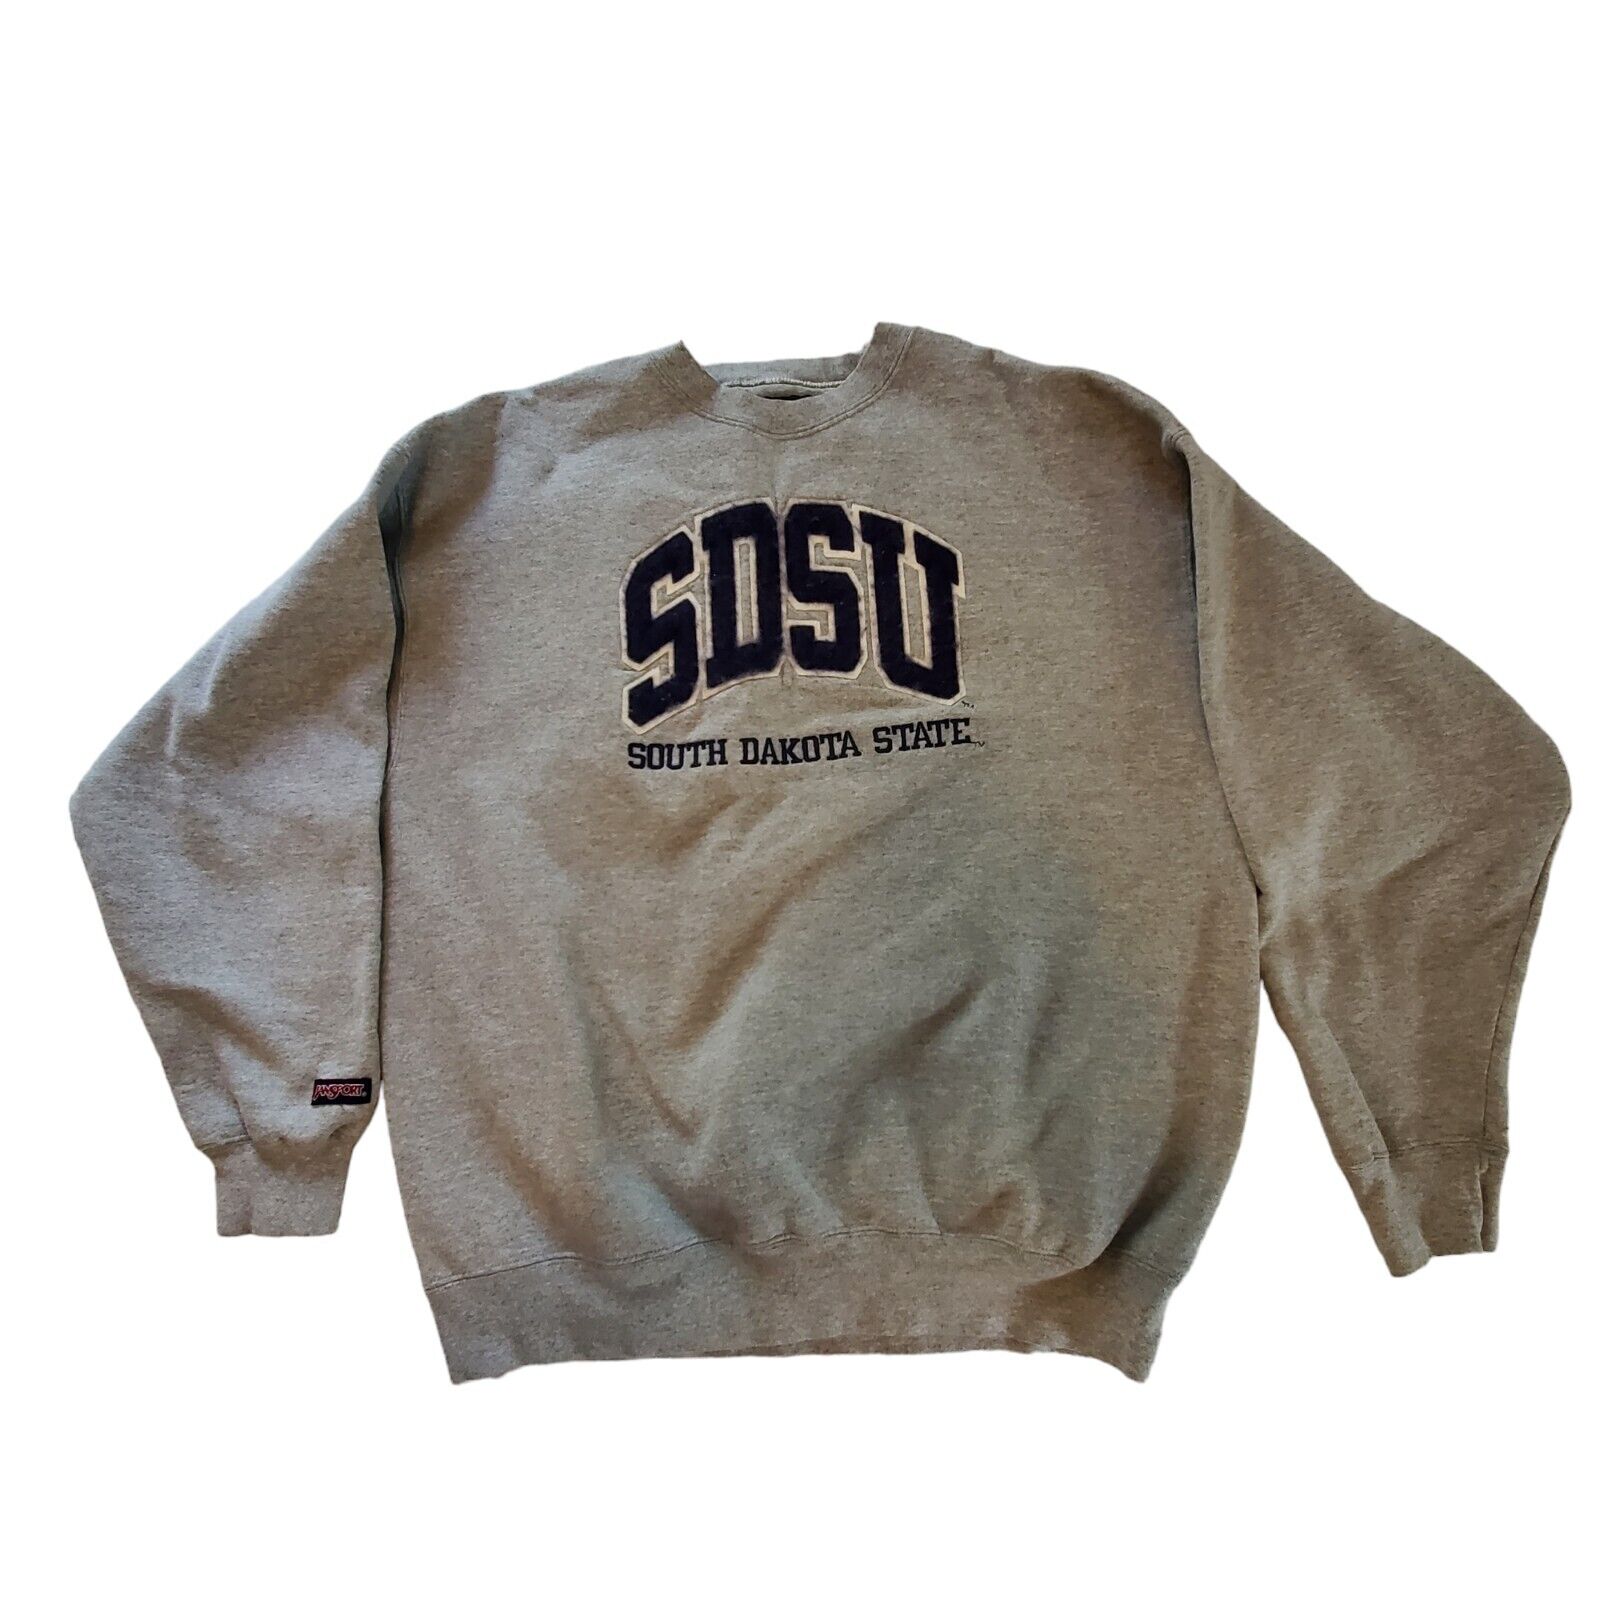 Vintage South Dakota State University Sweat shirt Grey SDSU Patch Crewneck XL 